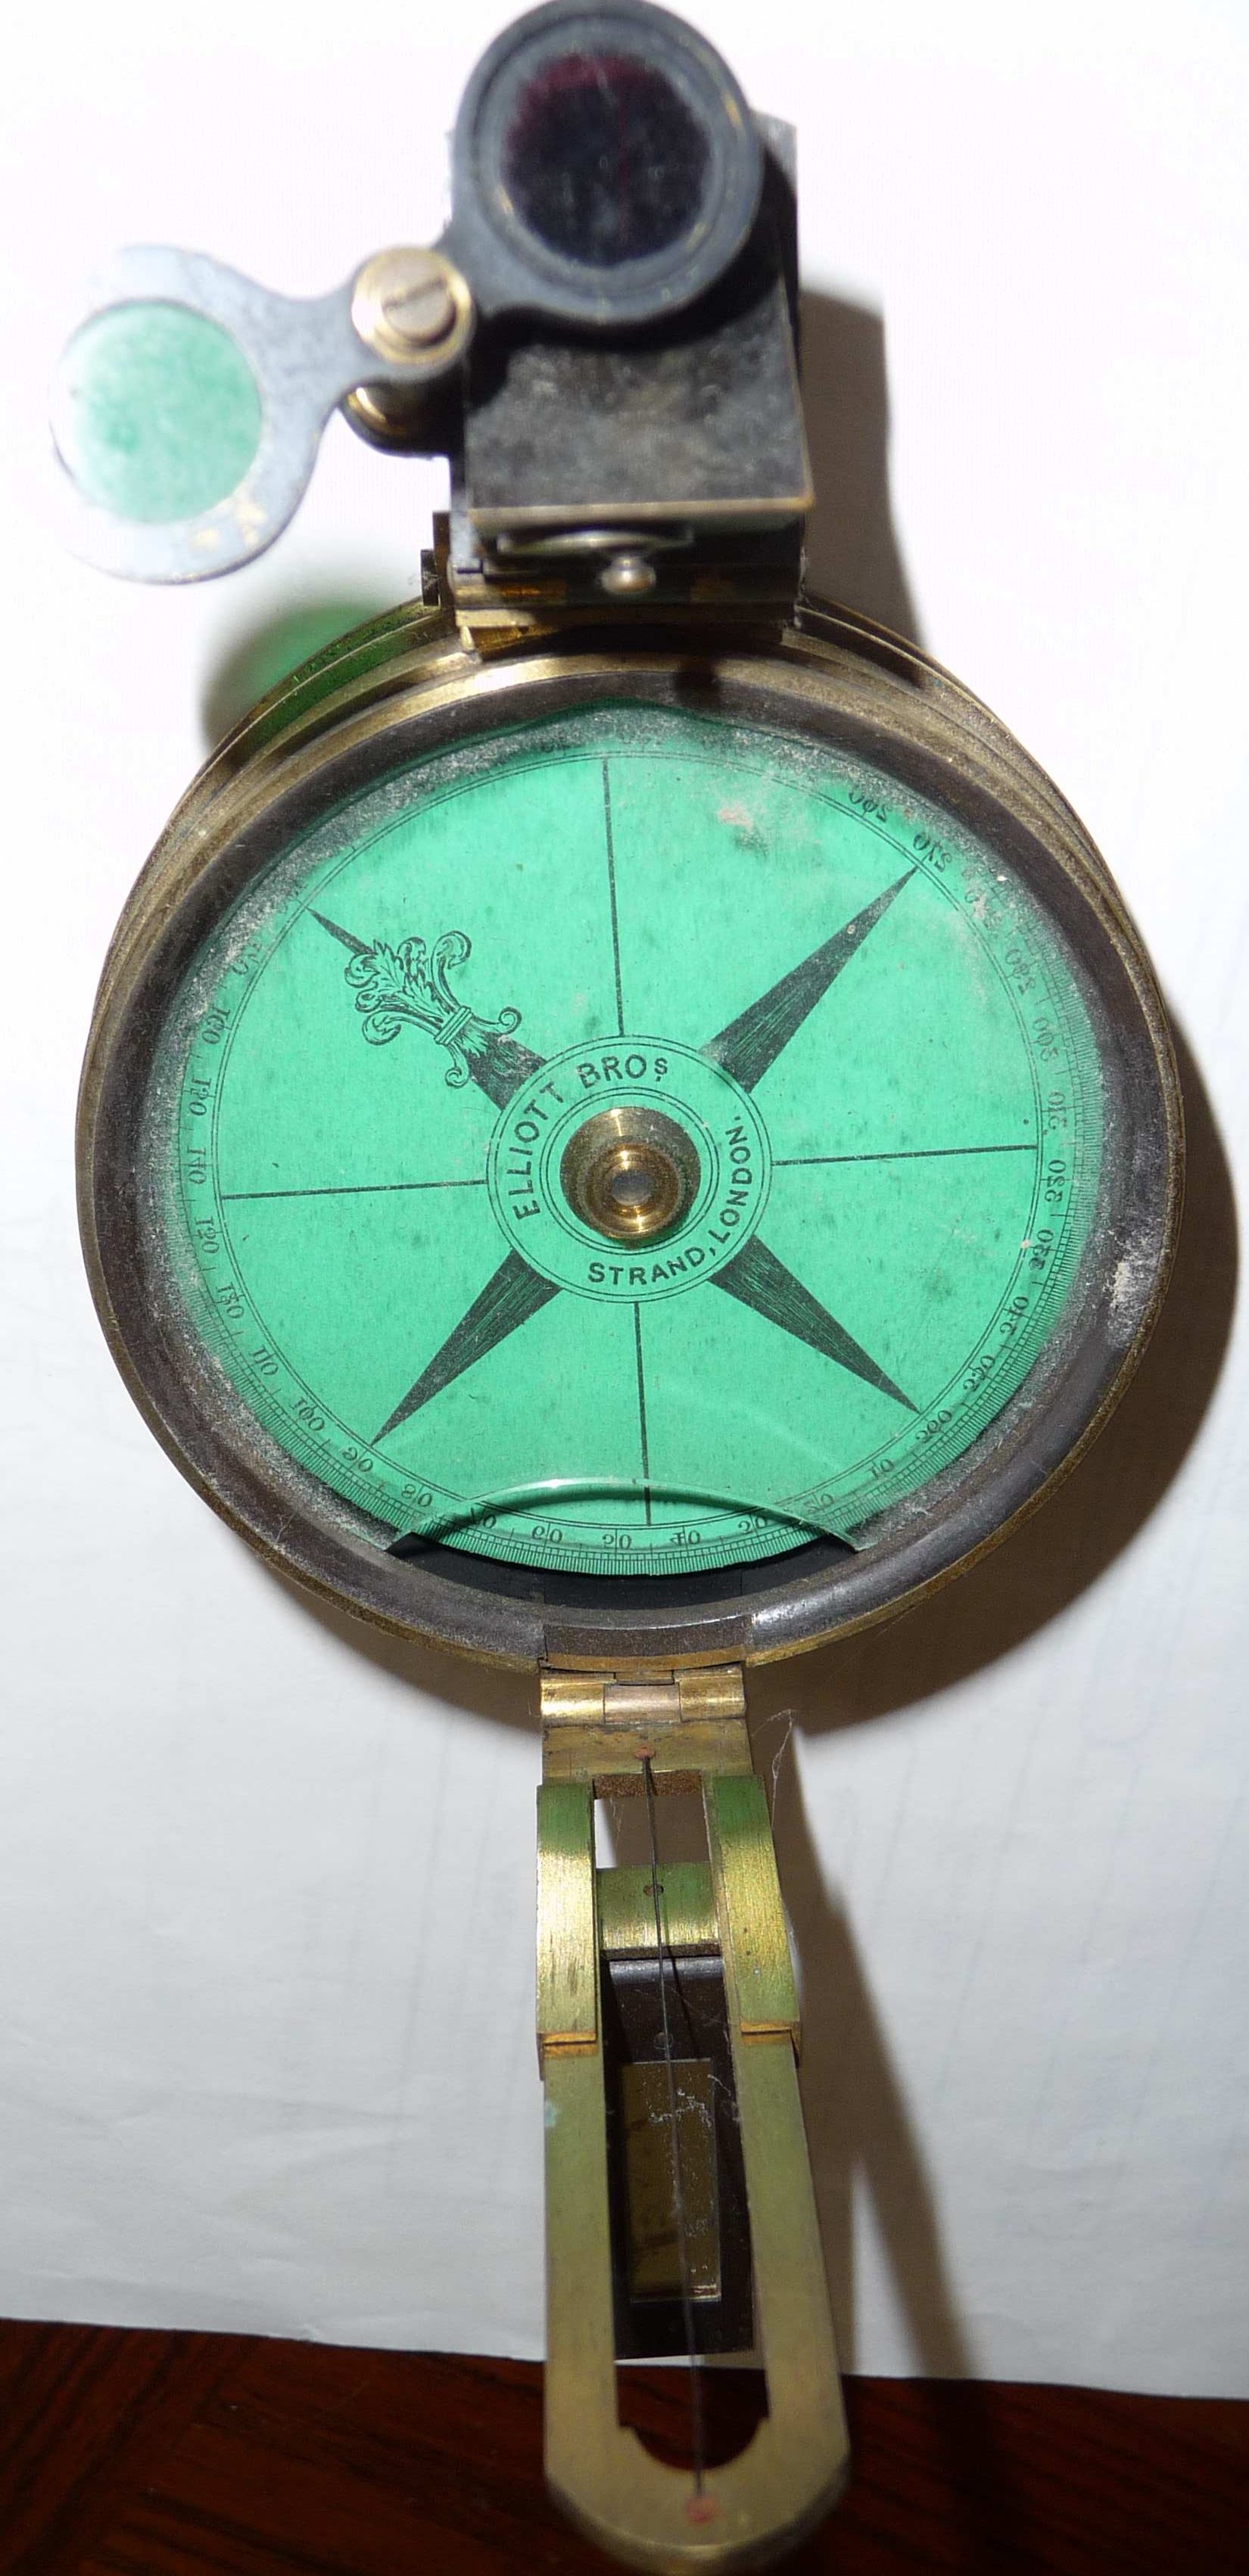 Hubert Brooks' Compass